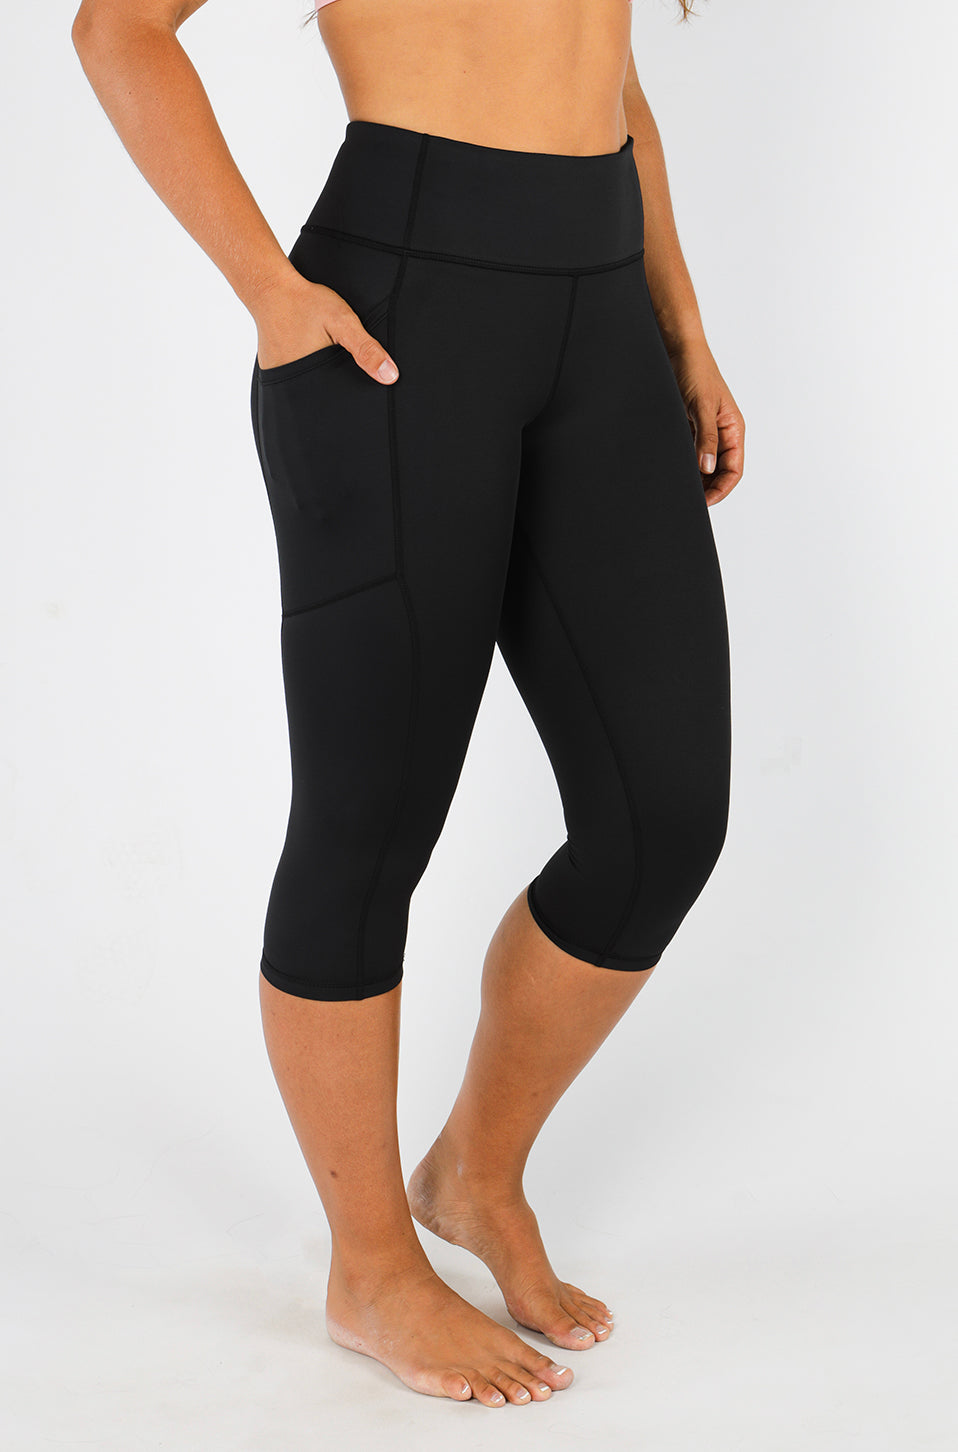 KINPLE Women's Knee Length Cotton Capri Leggings with Pockets, High Waisted  Casual Summer Yoga Workout Exercise Pants - Walmart.com